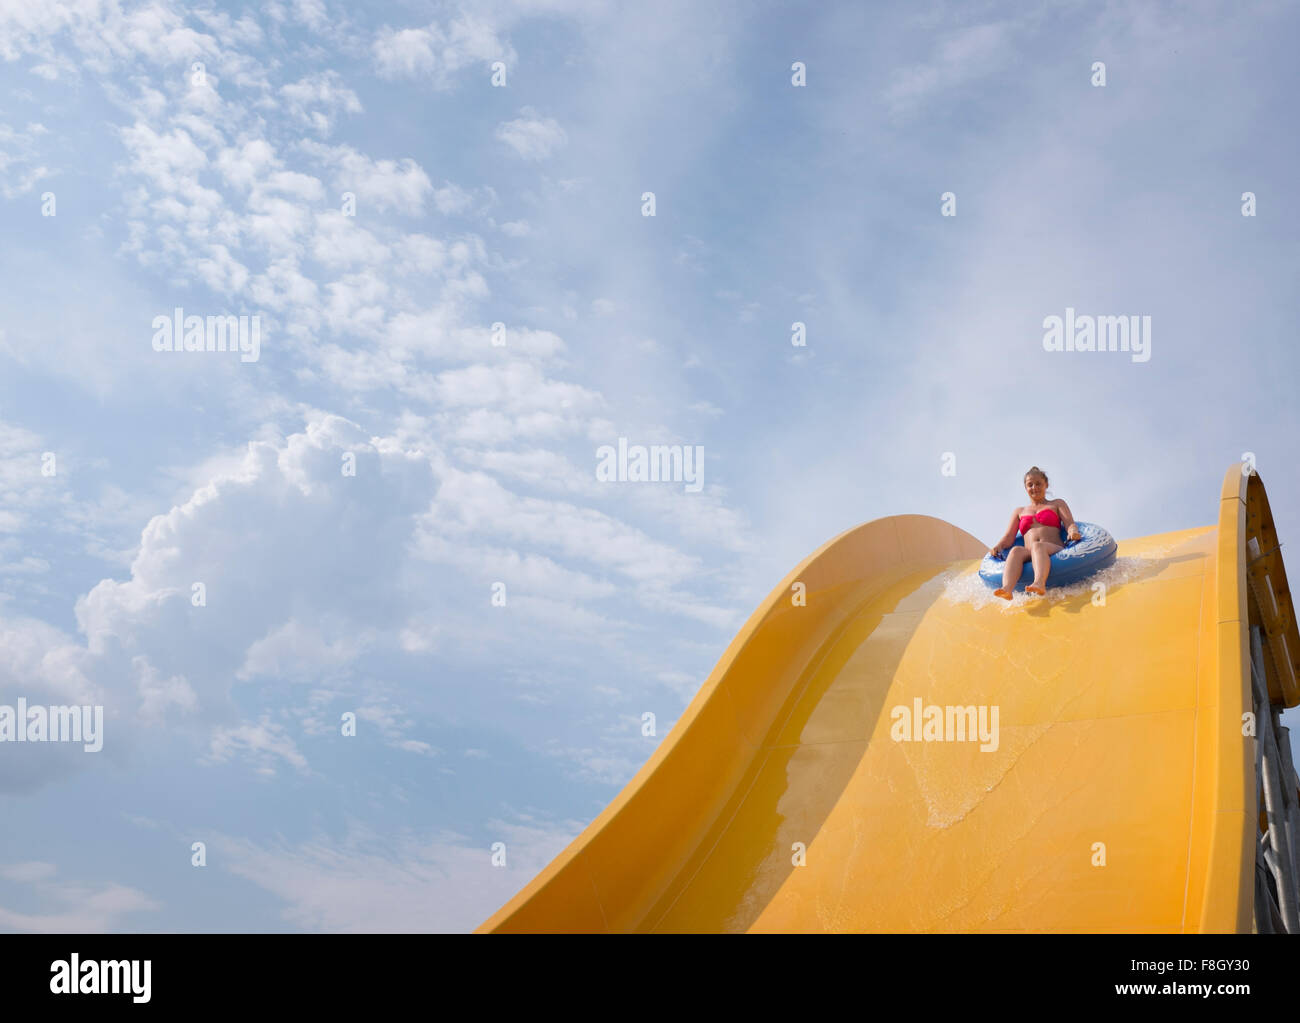 Hispanic woman on water slide Stock Photo